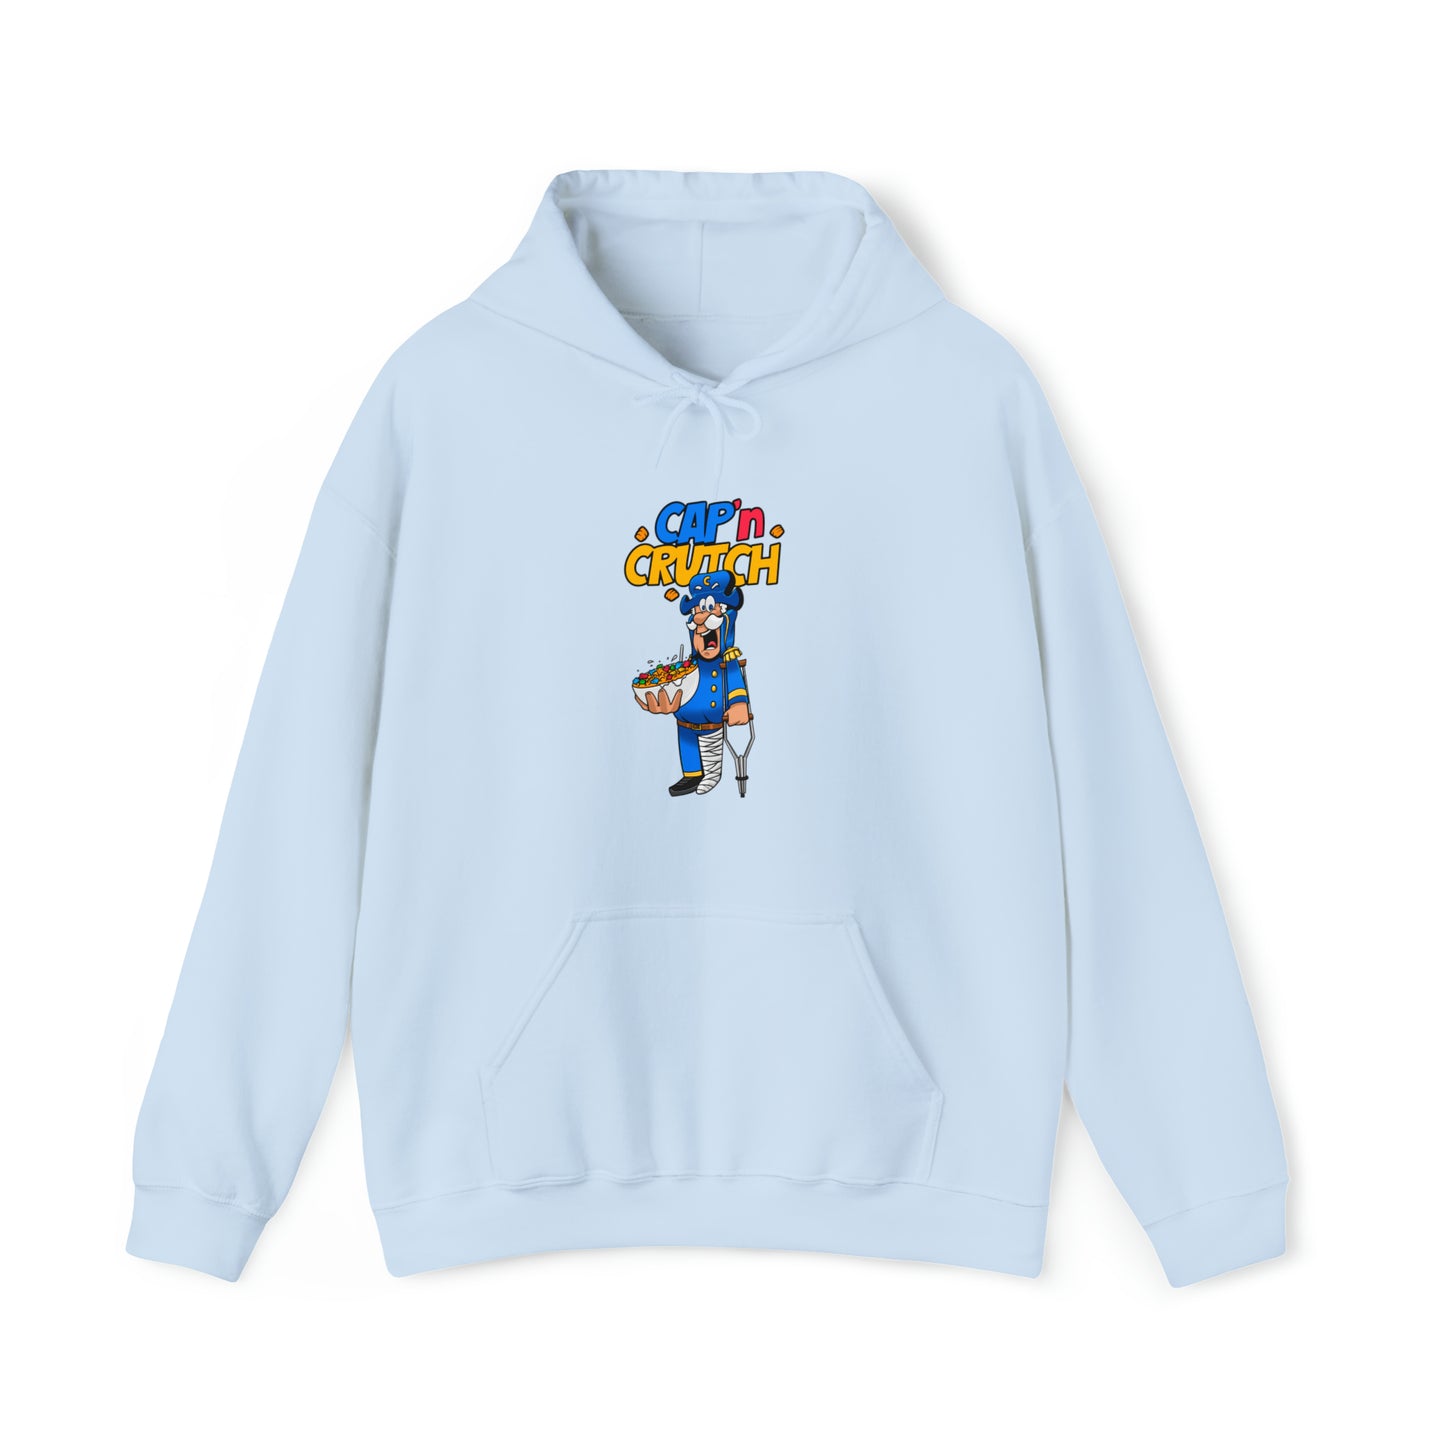 Custom Parody Hooded Sweatshirt, Cap N Crutch design